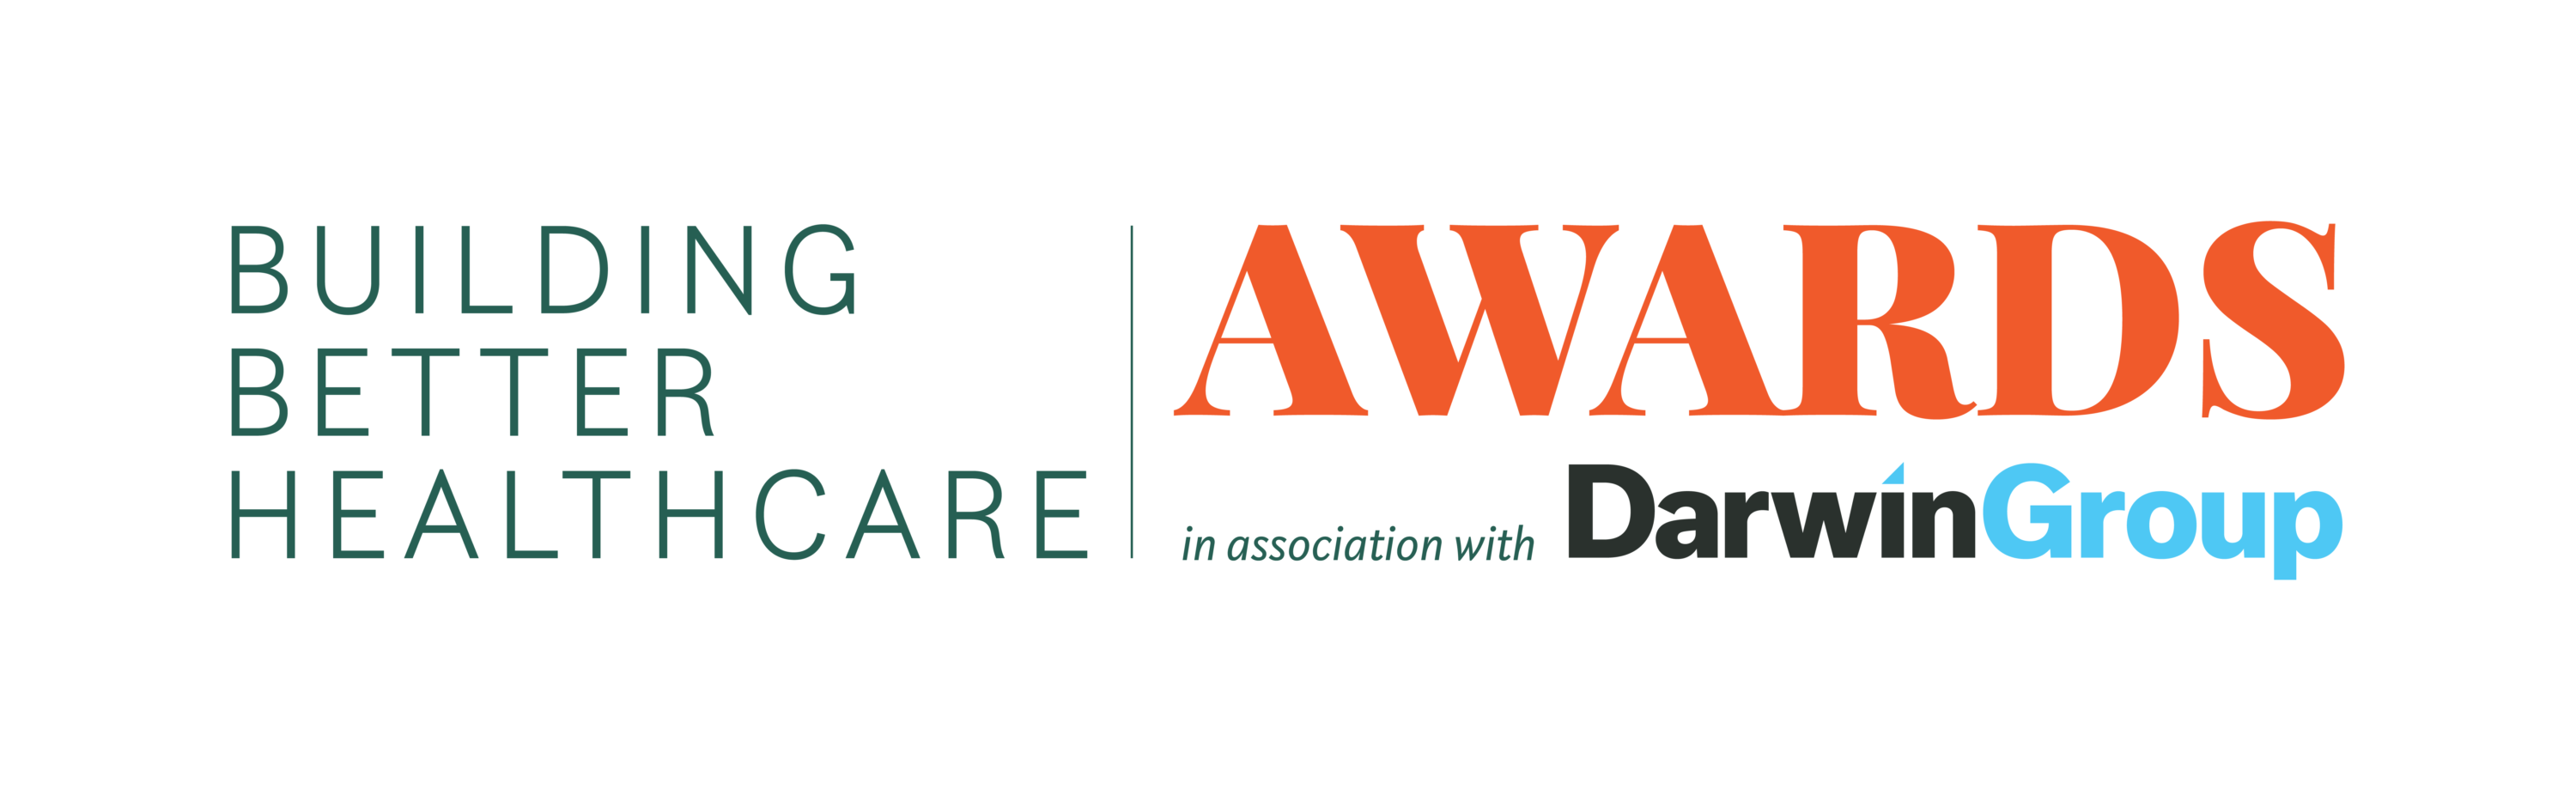 Building Better Healthcare Awards logo, incorporating the Darwin Group logo